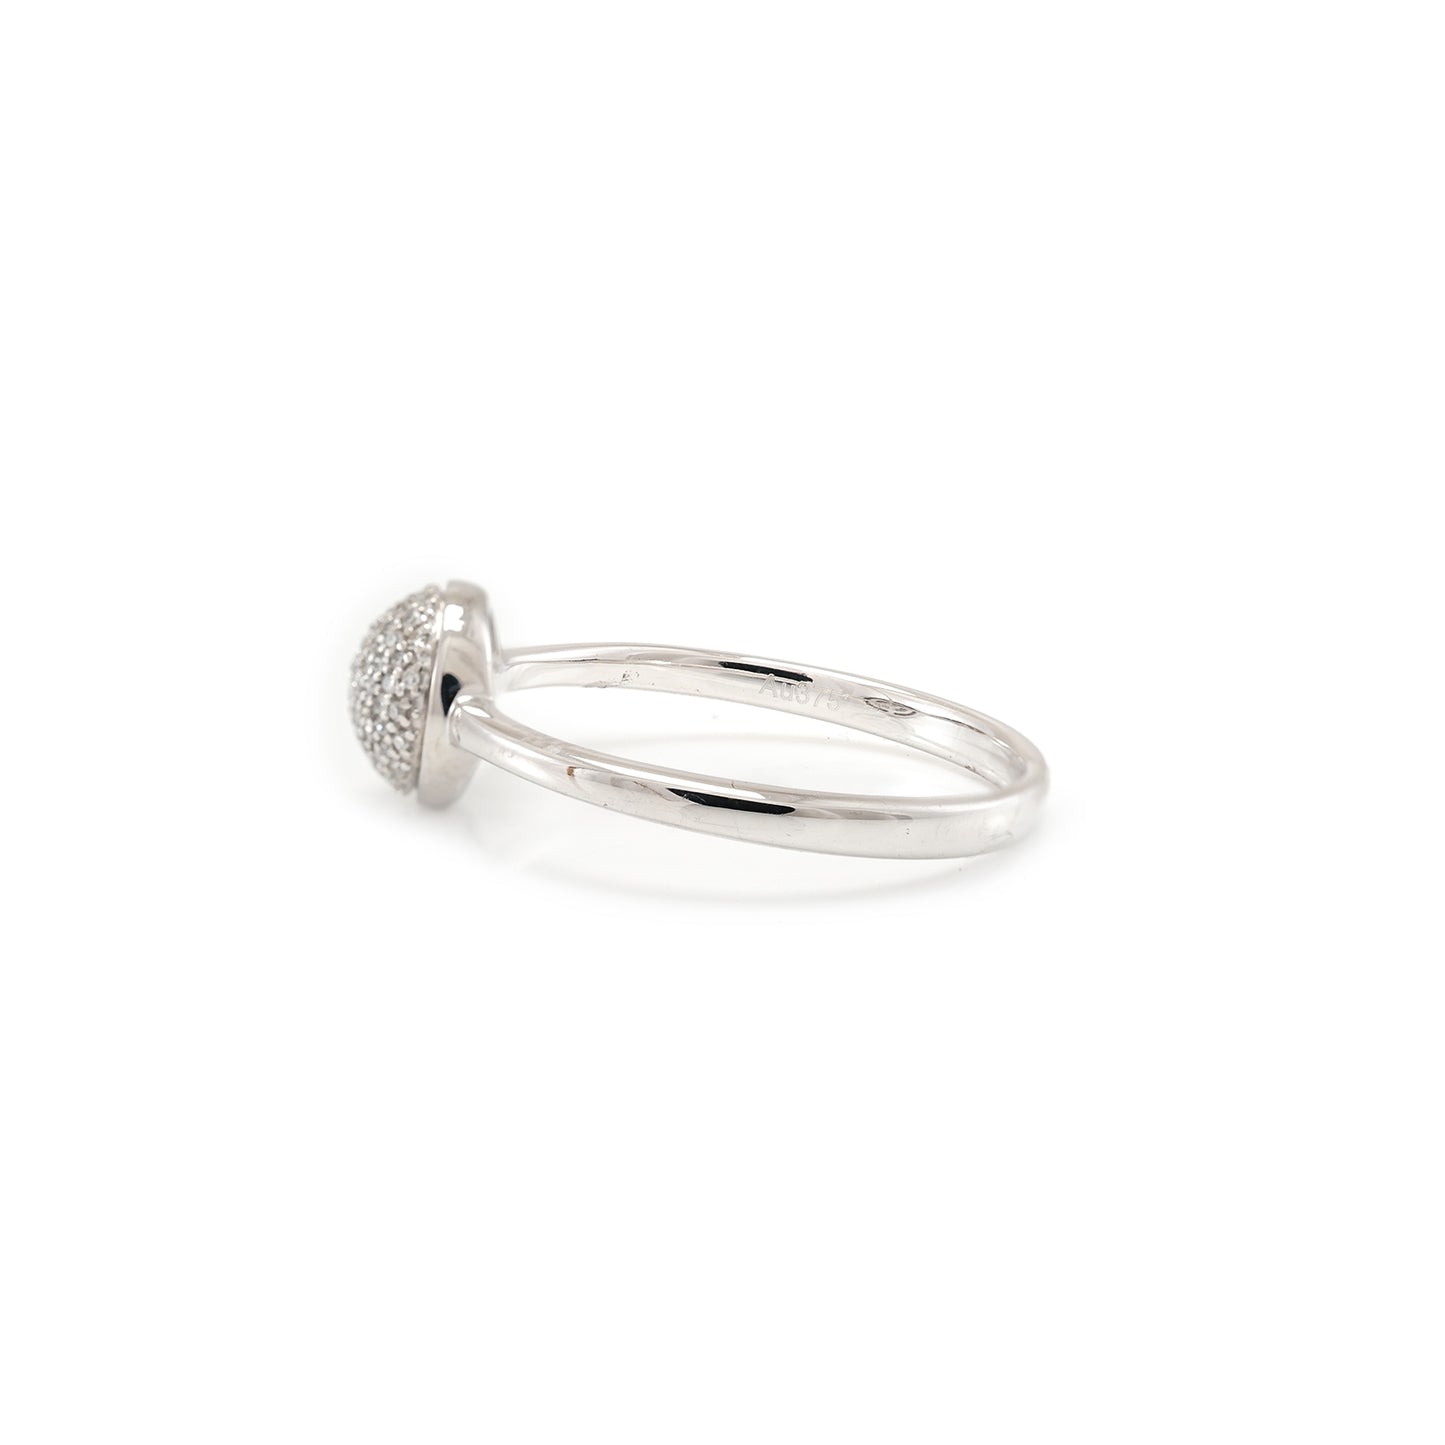 White gold ring diamond ring diamond brilliant pave white gold 375 9K women's jewelry gold ring